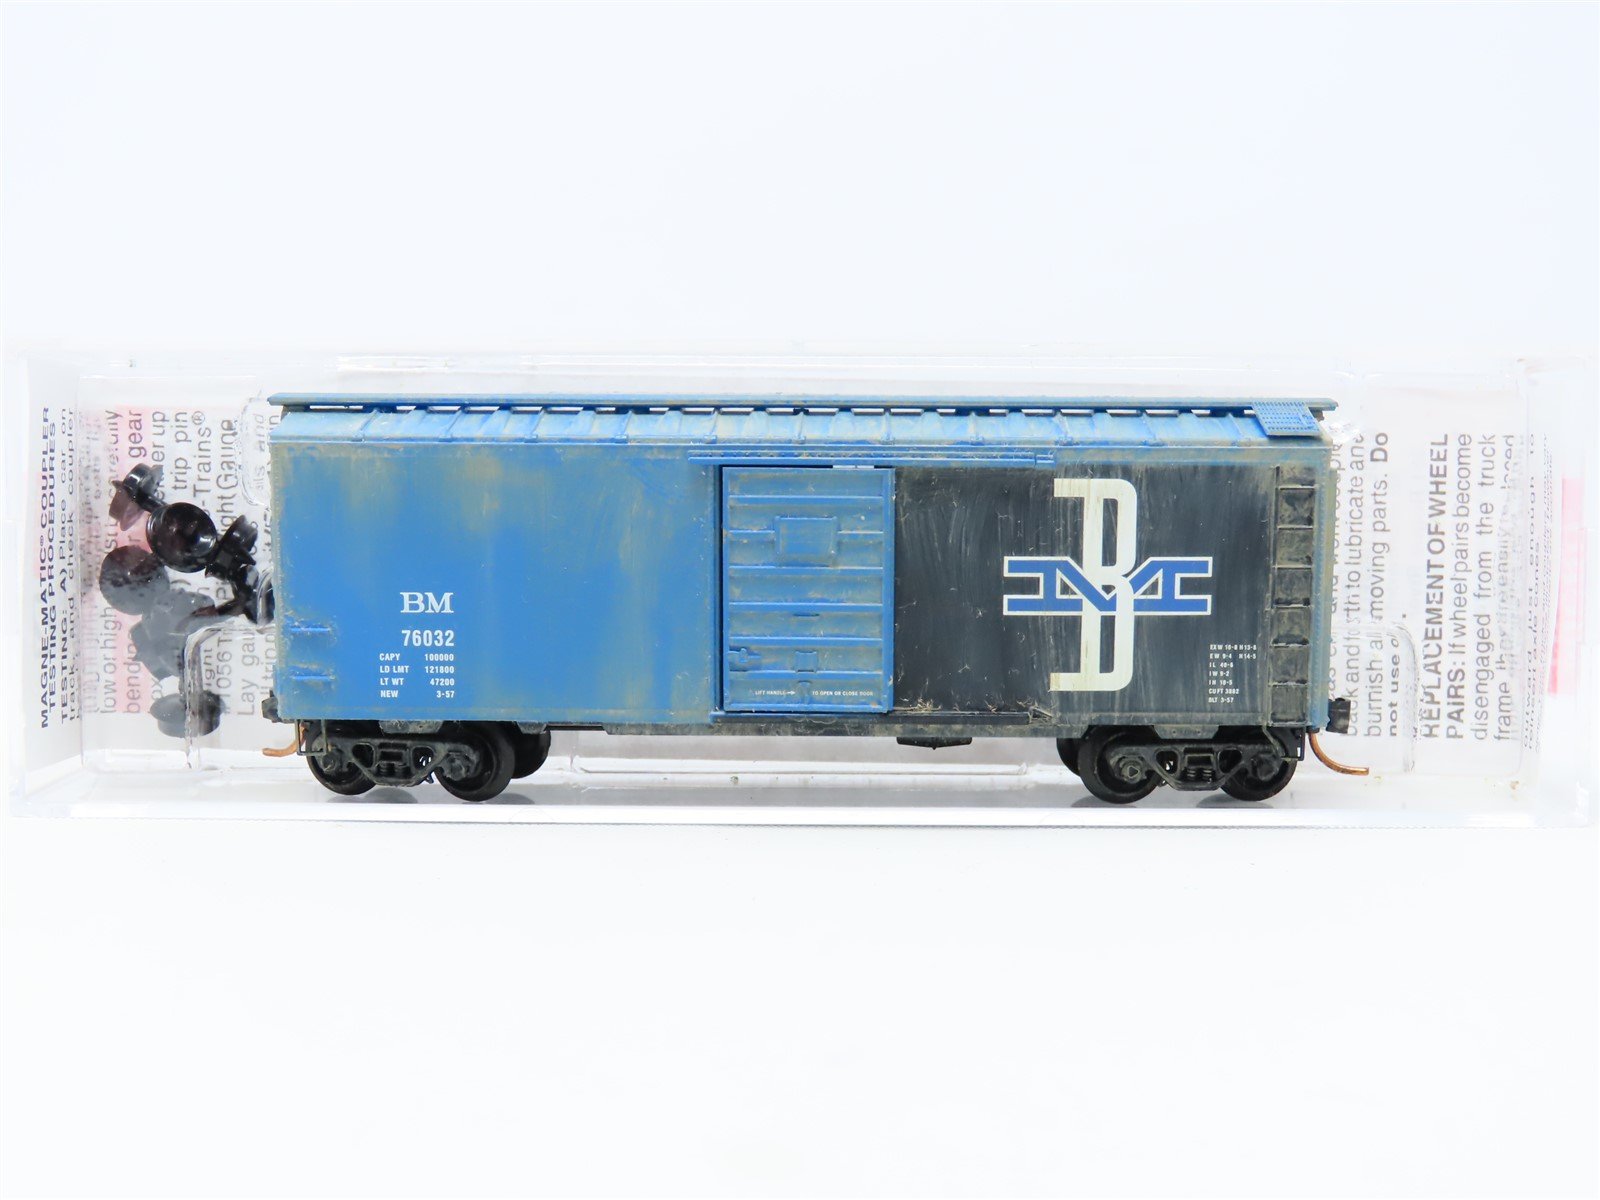 N Micro-Trains MTL #02000696 BM Boston & Maine 40' Box Car #76032 - Custom